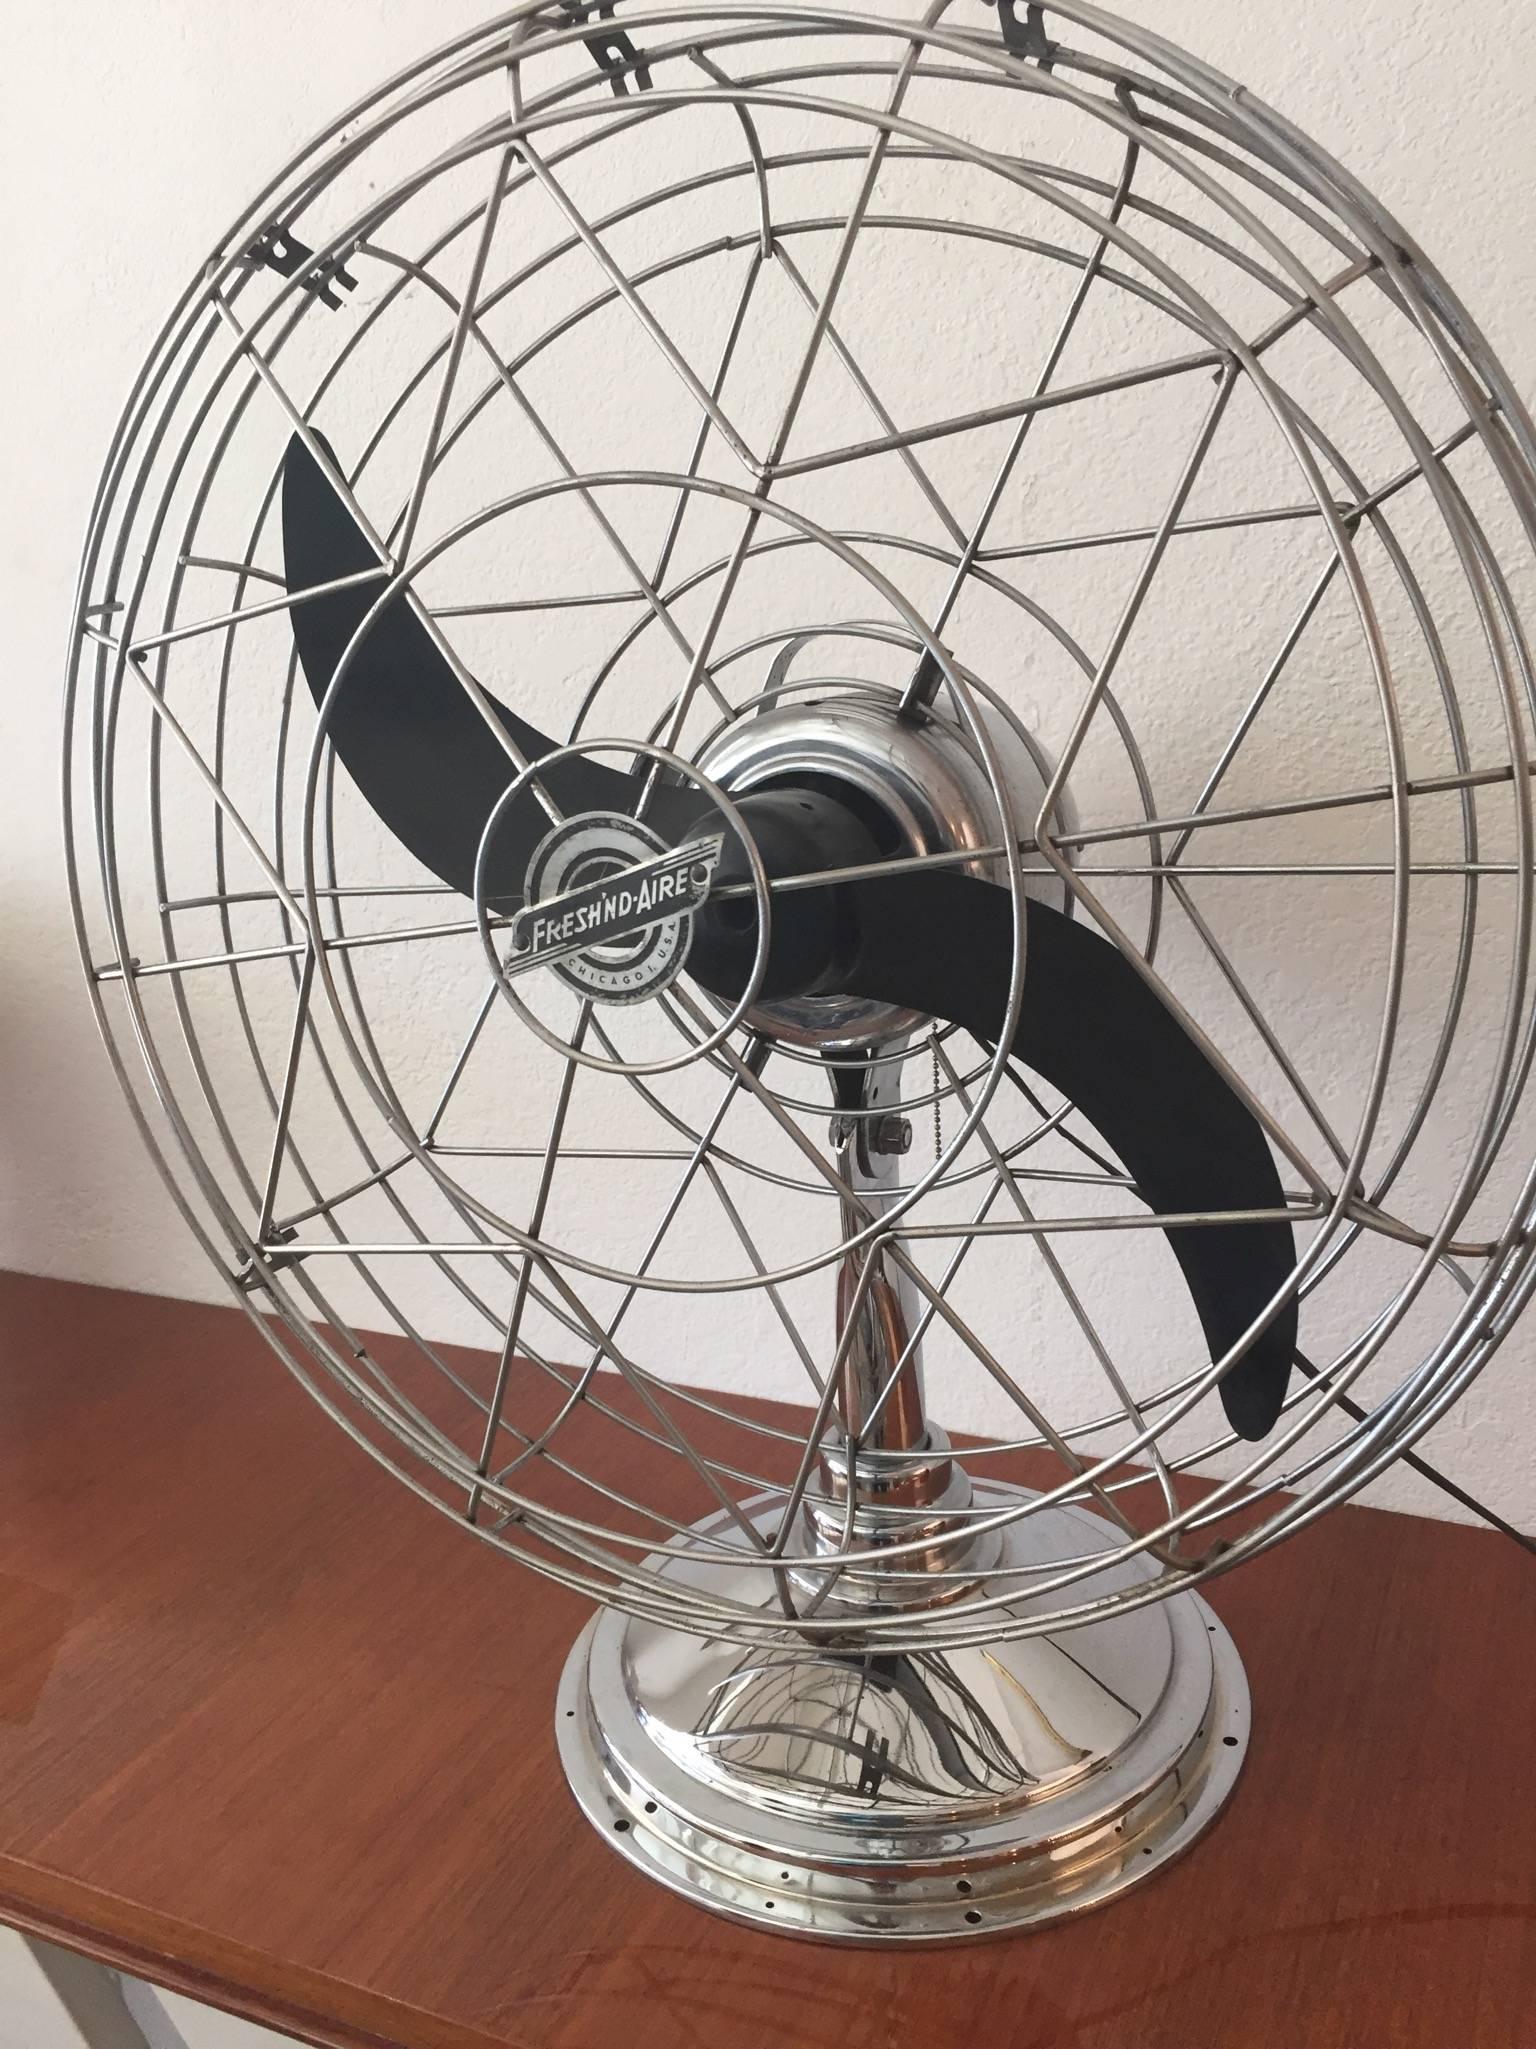 fresh'nd aire fan parts